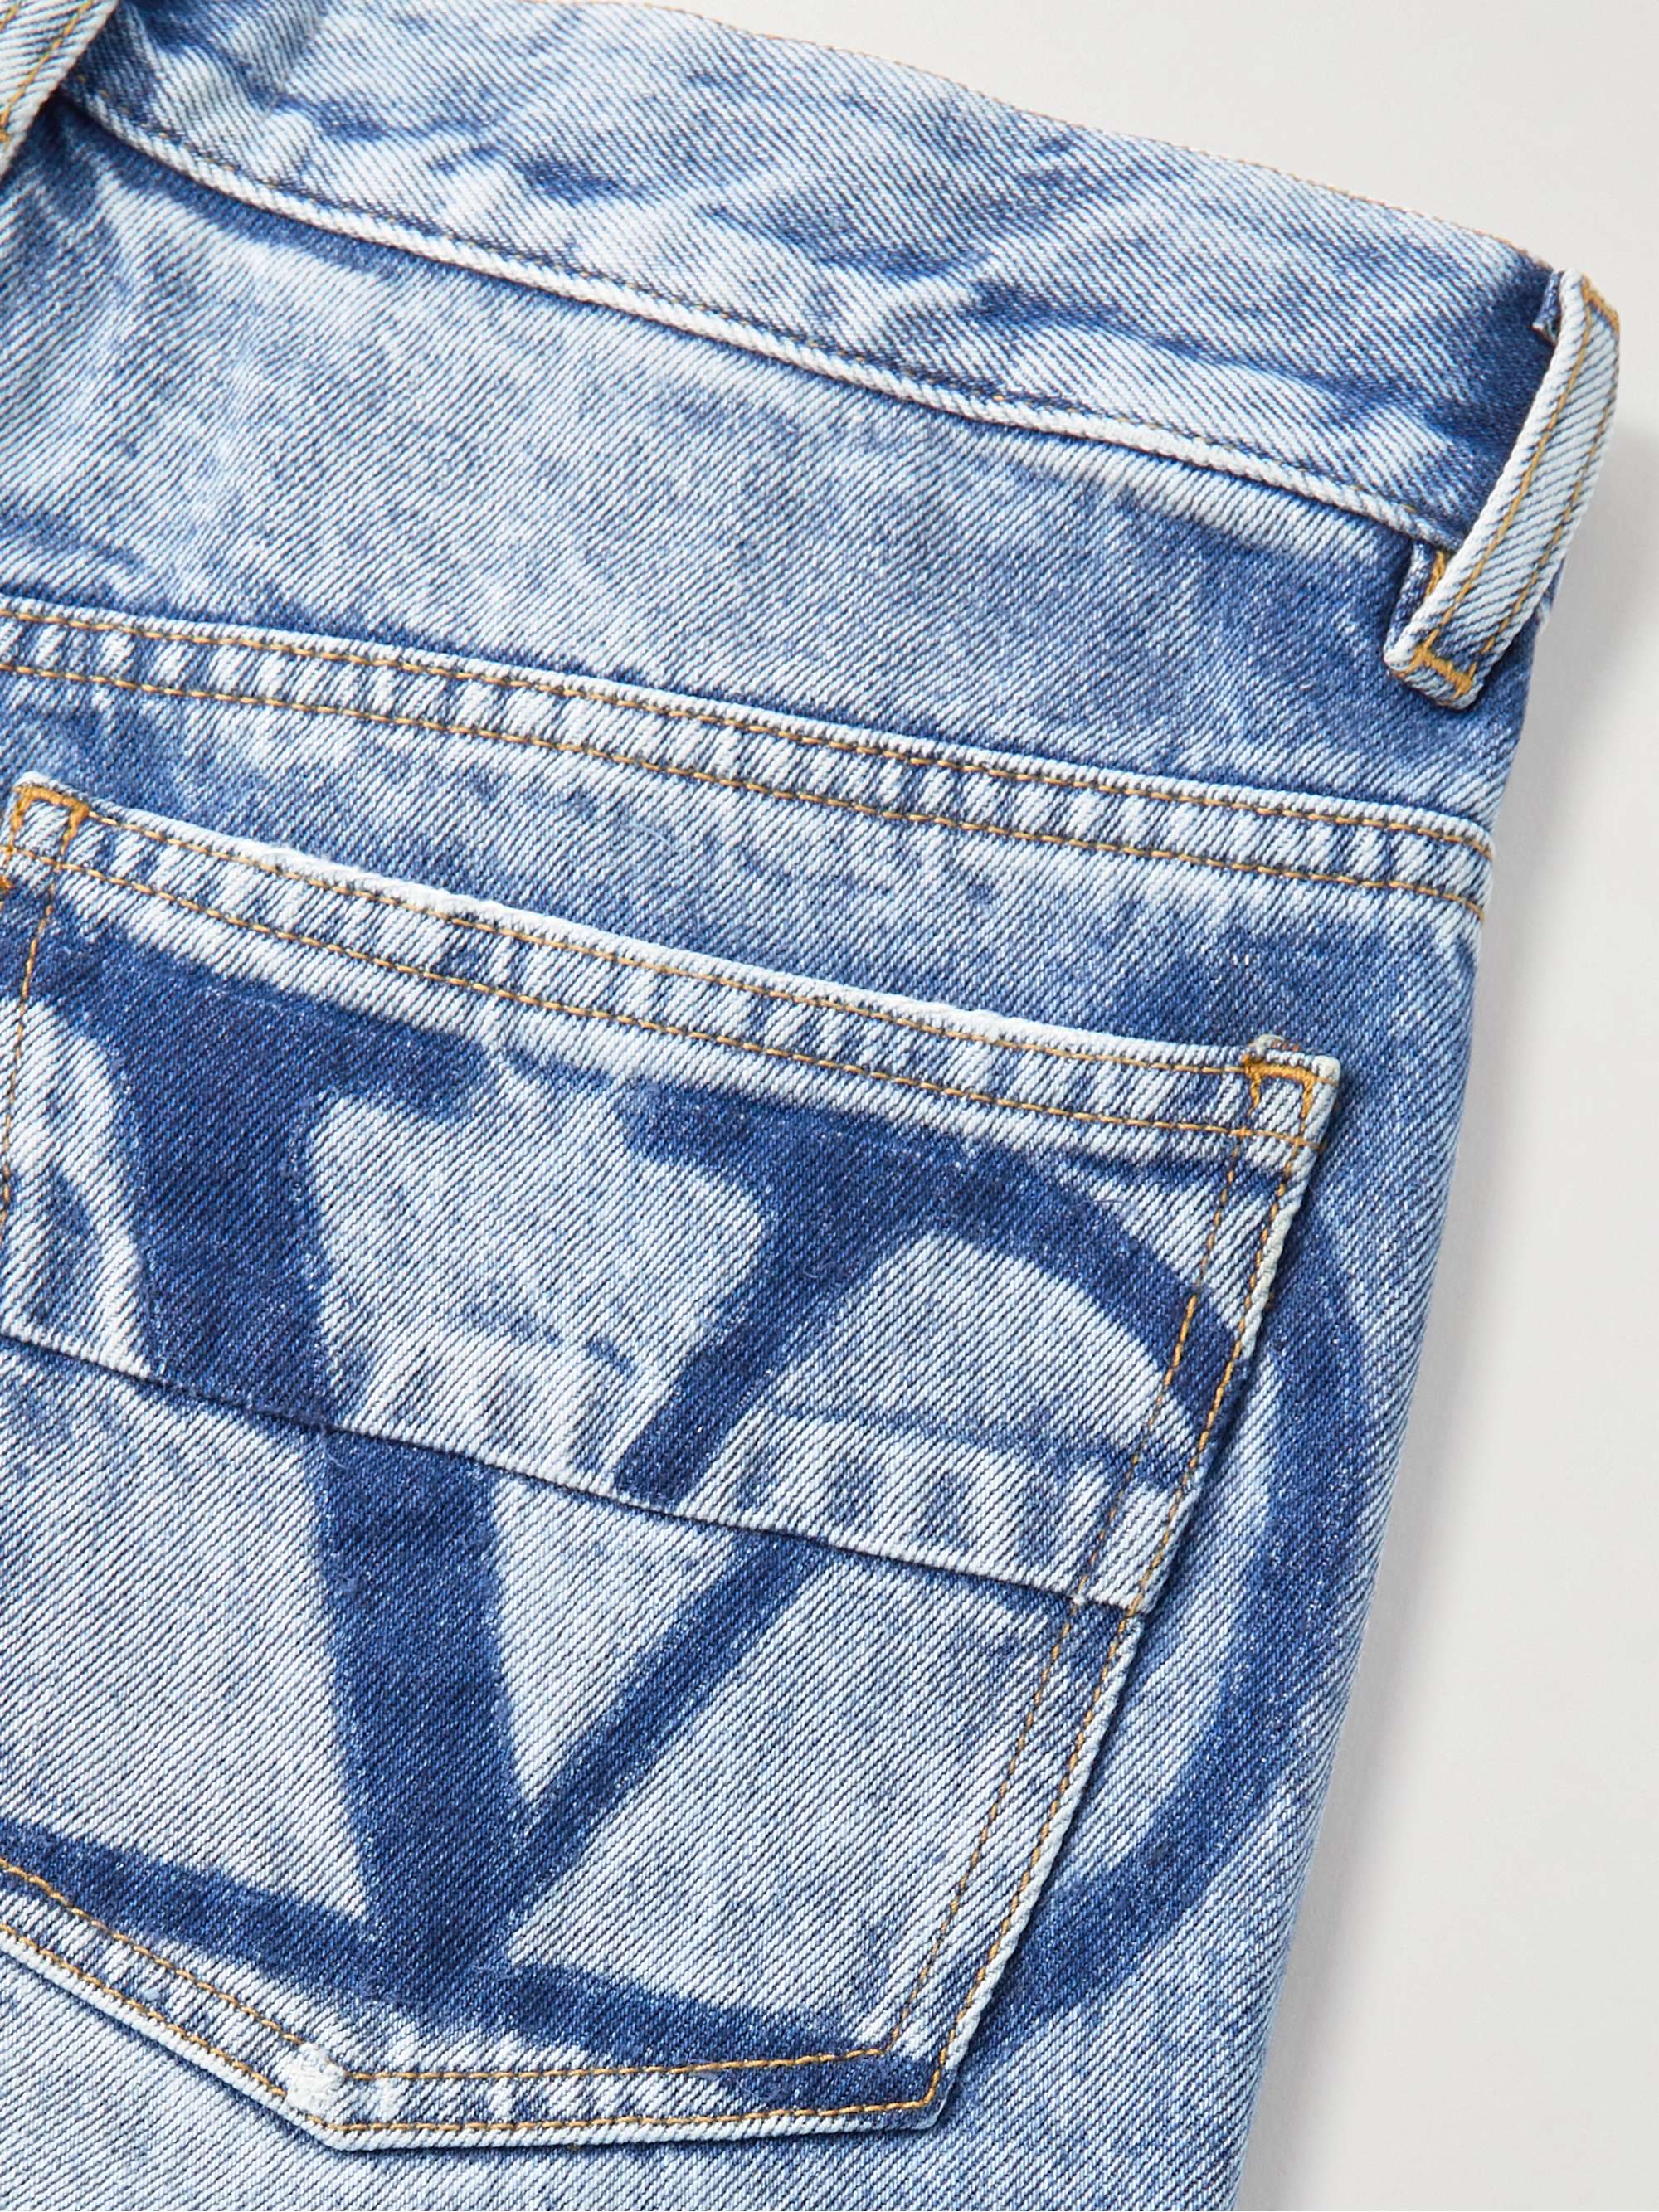 VALENTINO Straight-Leg Logo-Detailed Distressed Denim Jeans